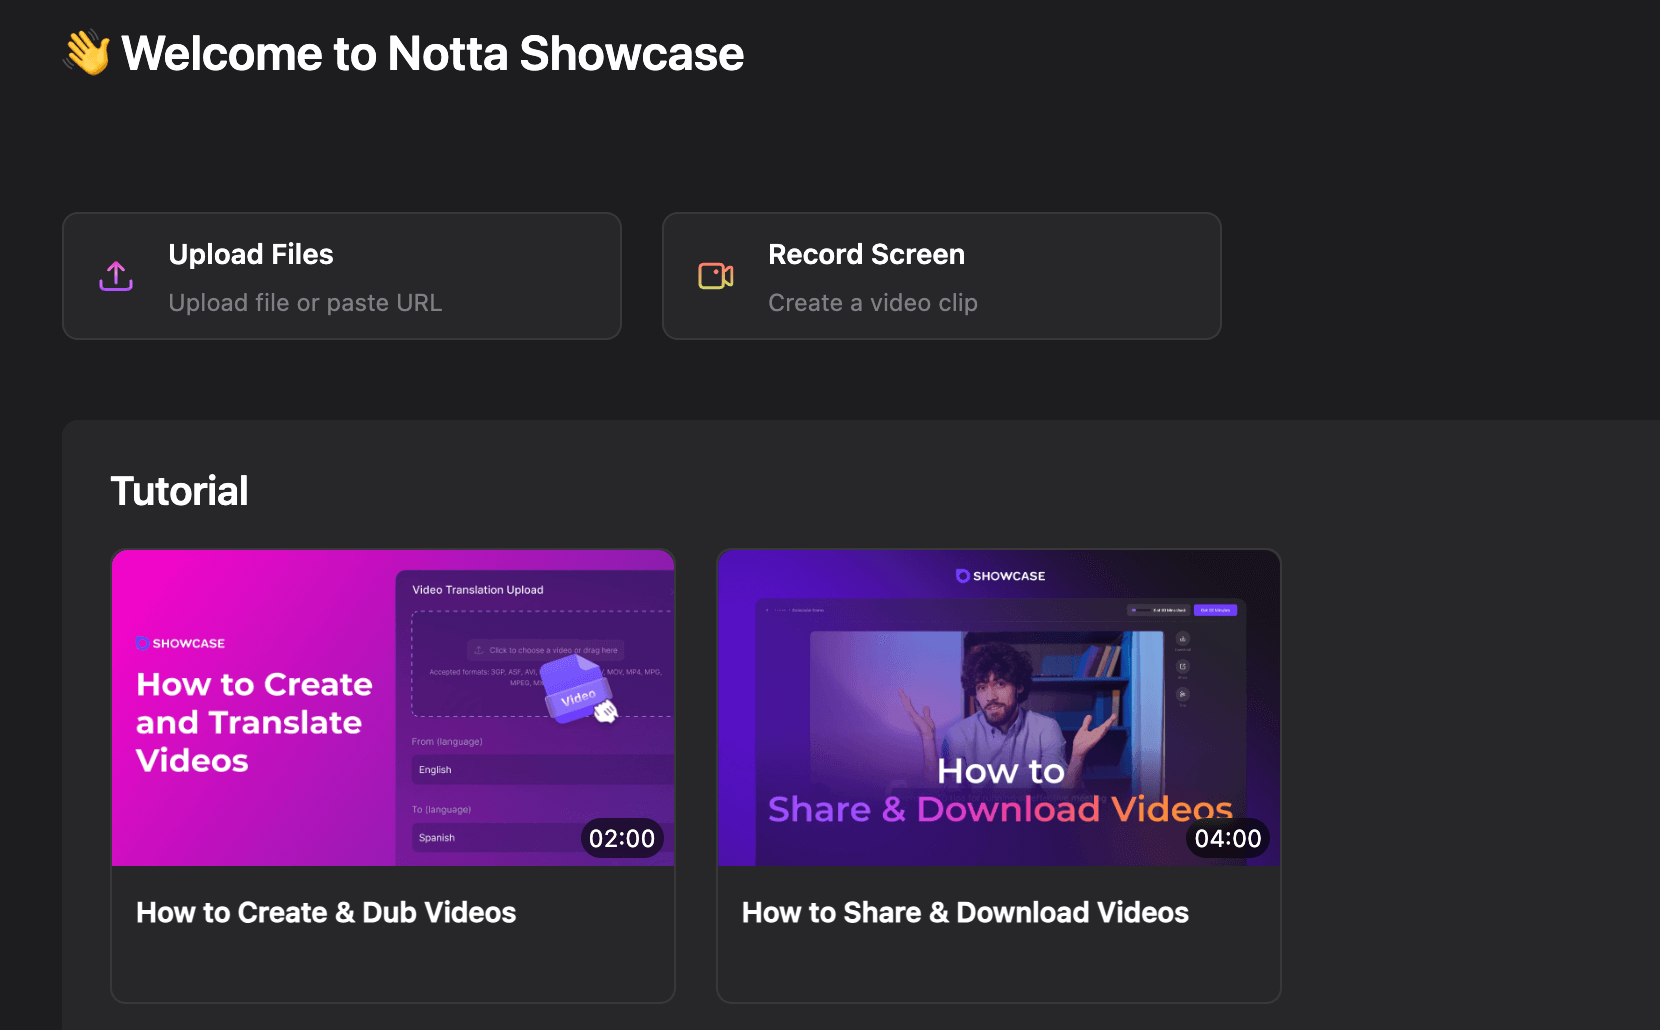 Notta Showcase interface